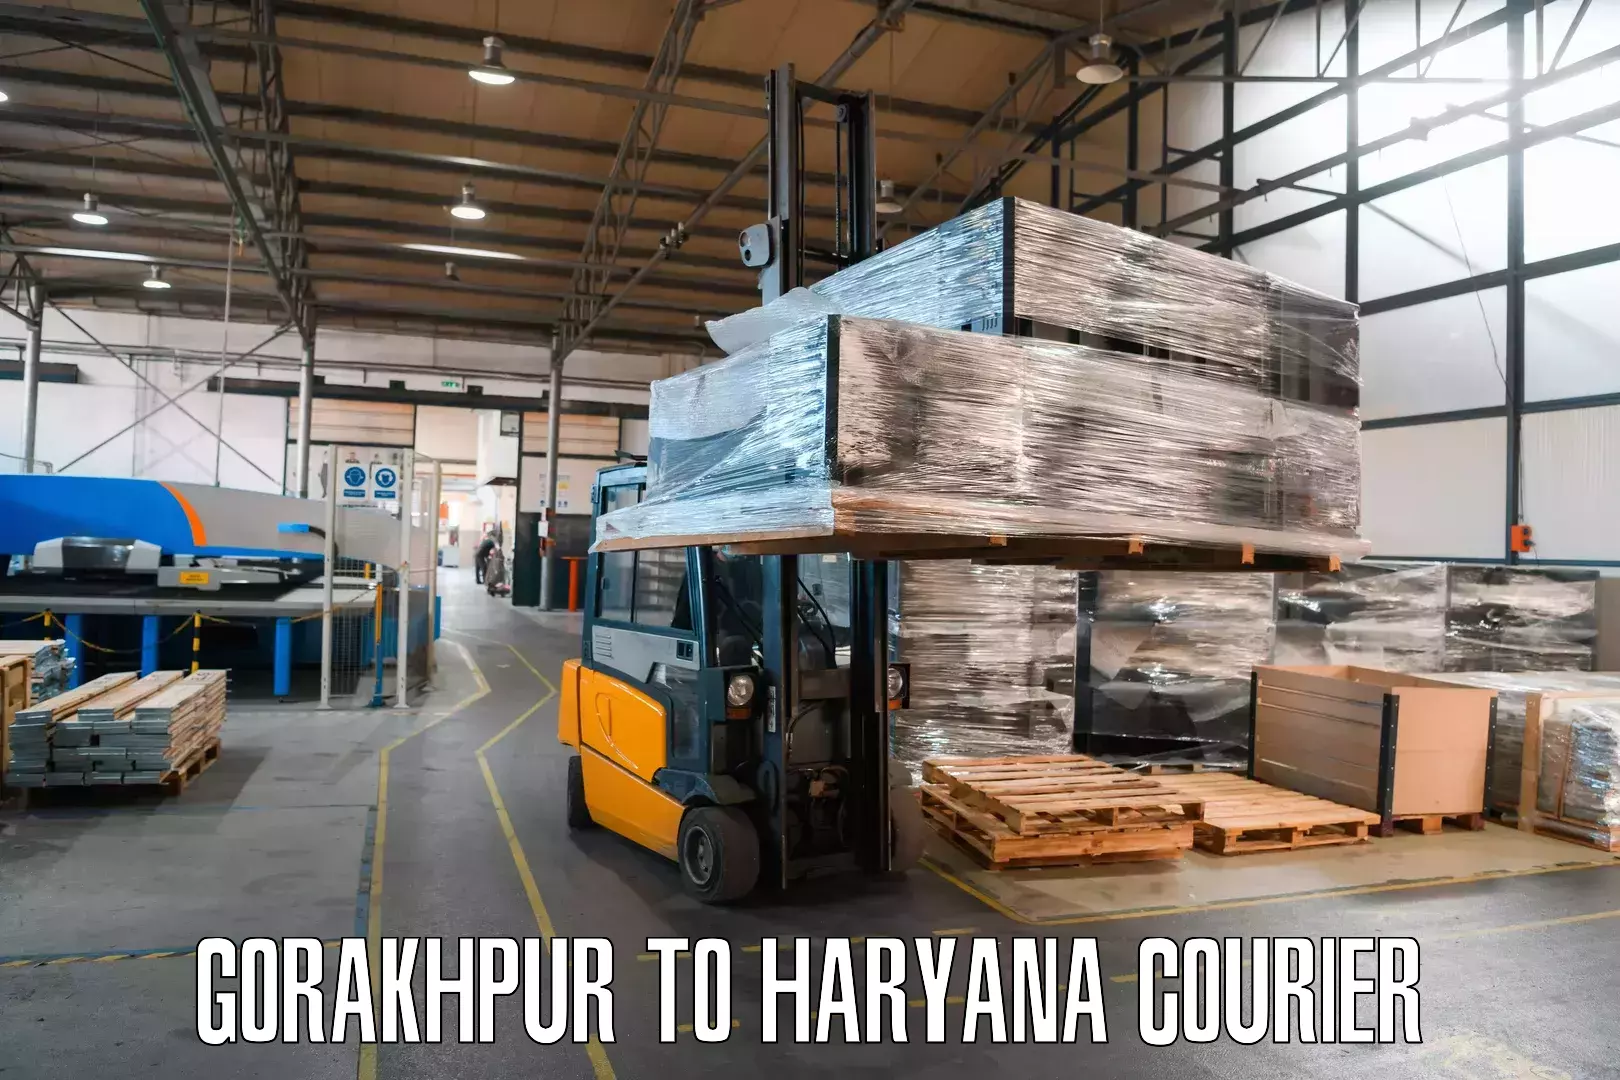 Doorstep delivery service Gorakhpur to Charkhi Dadri